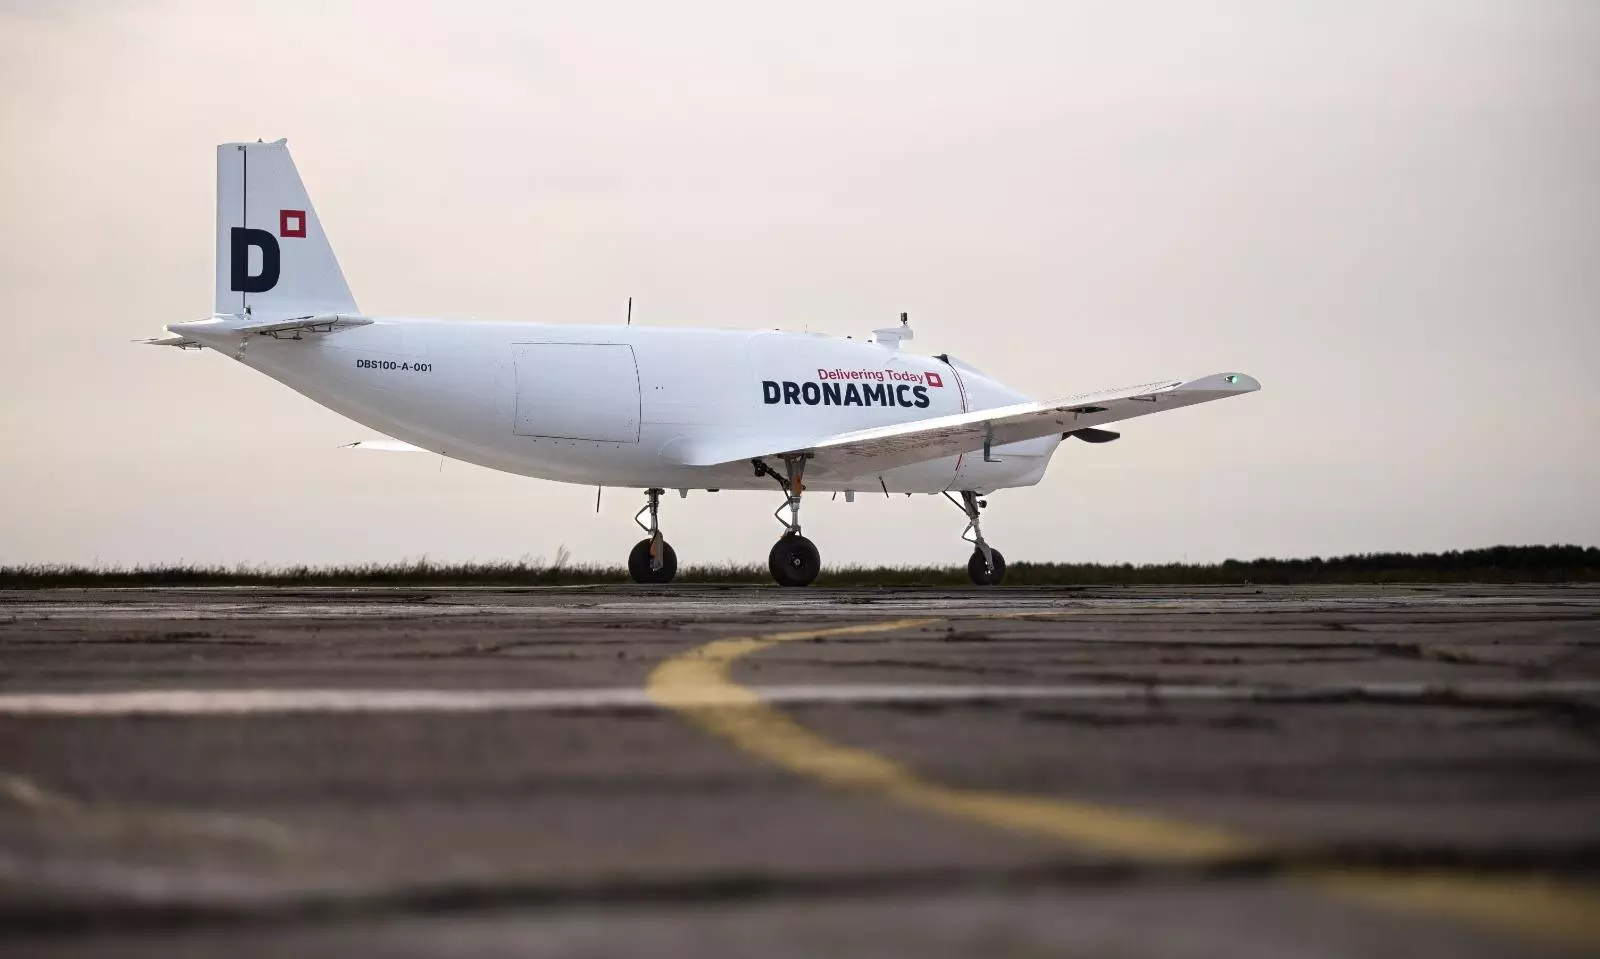 Dronamics first cargo drone airline with IATA, ICAO designator codes